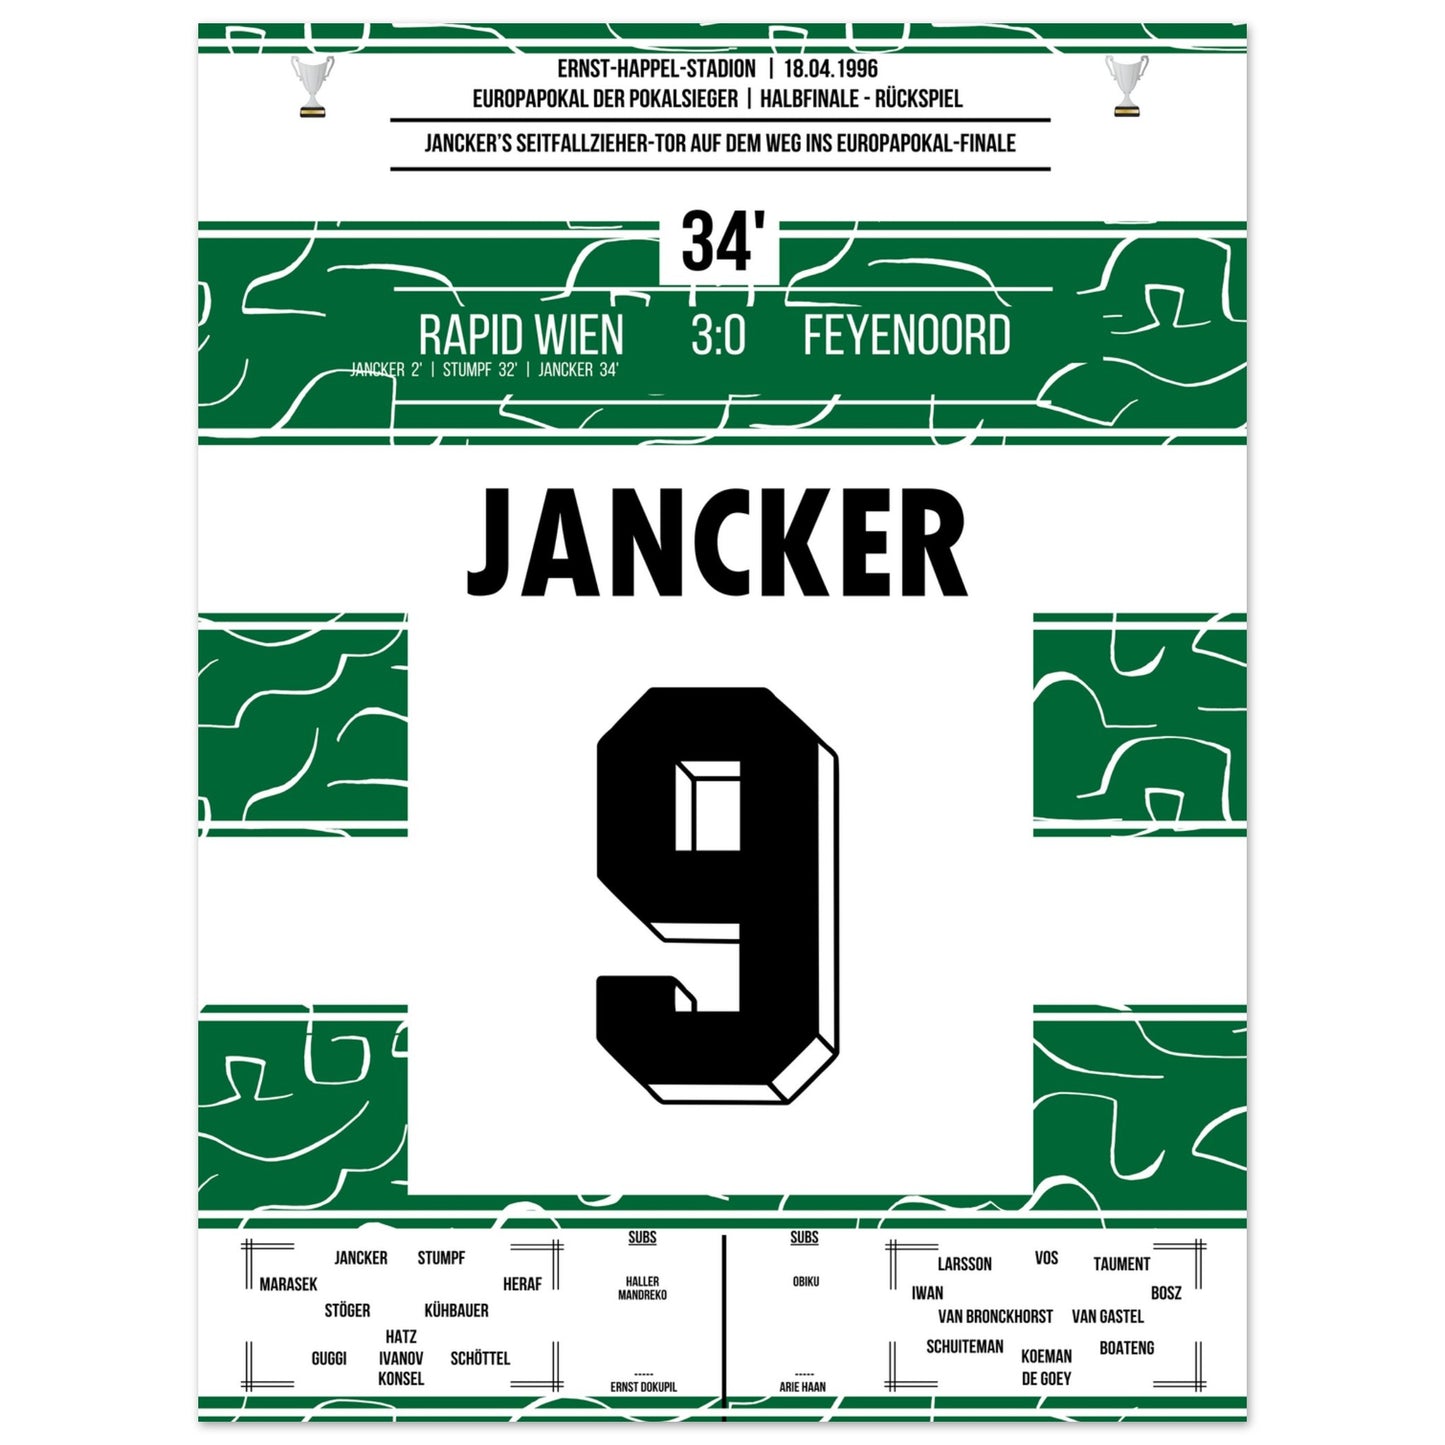 Jancker's Traumtor auf dem Weg ins Europapokalfinale 1996